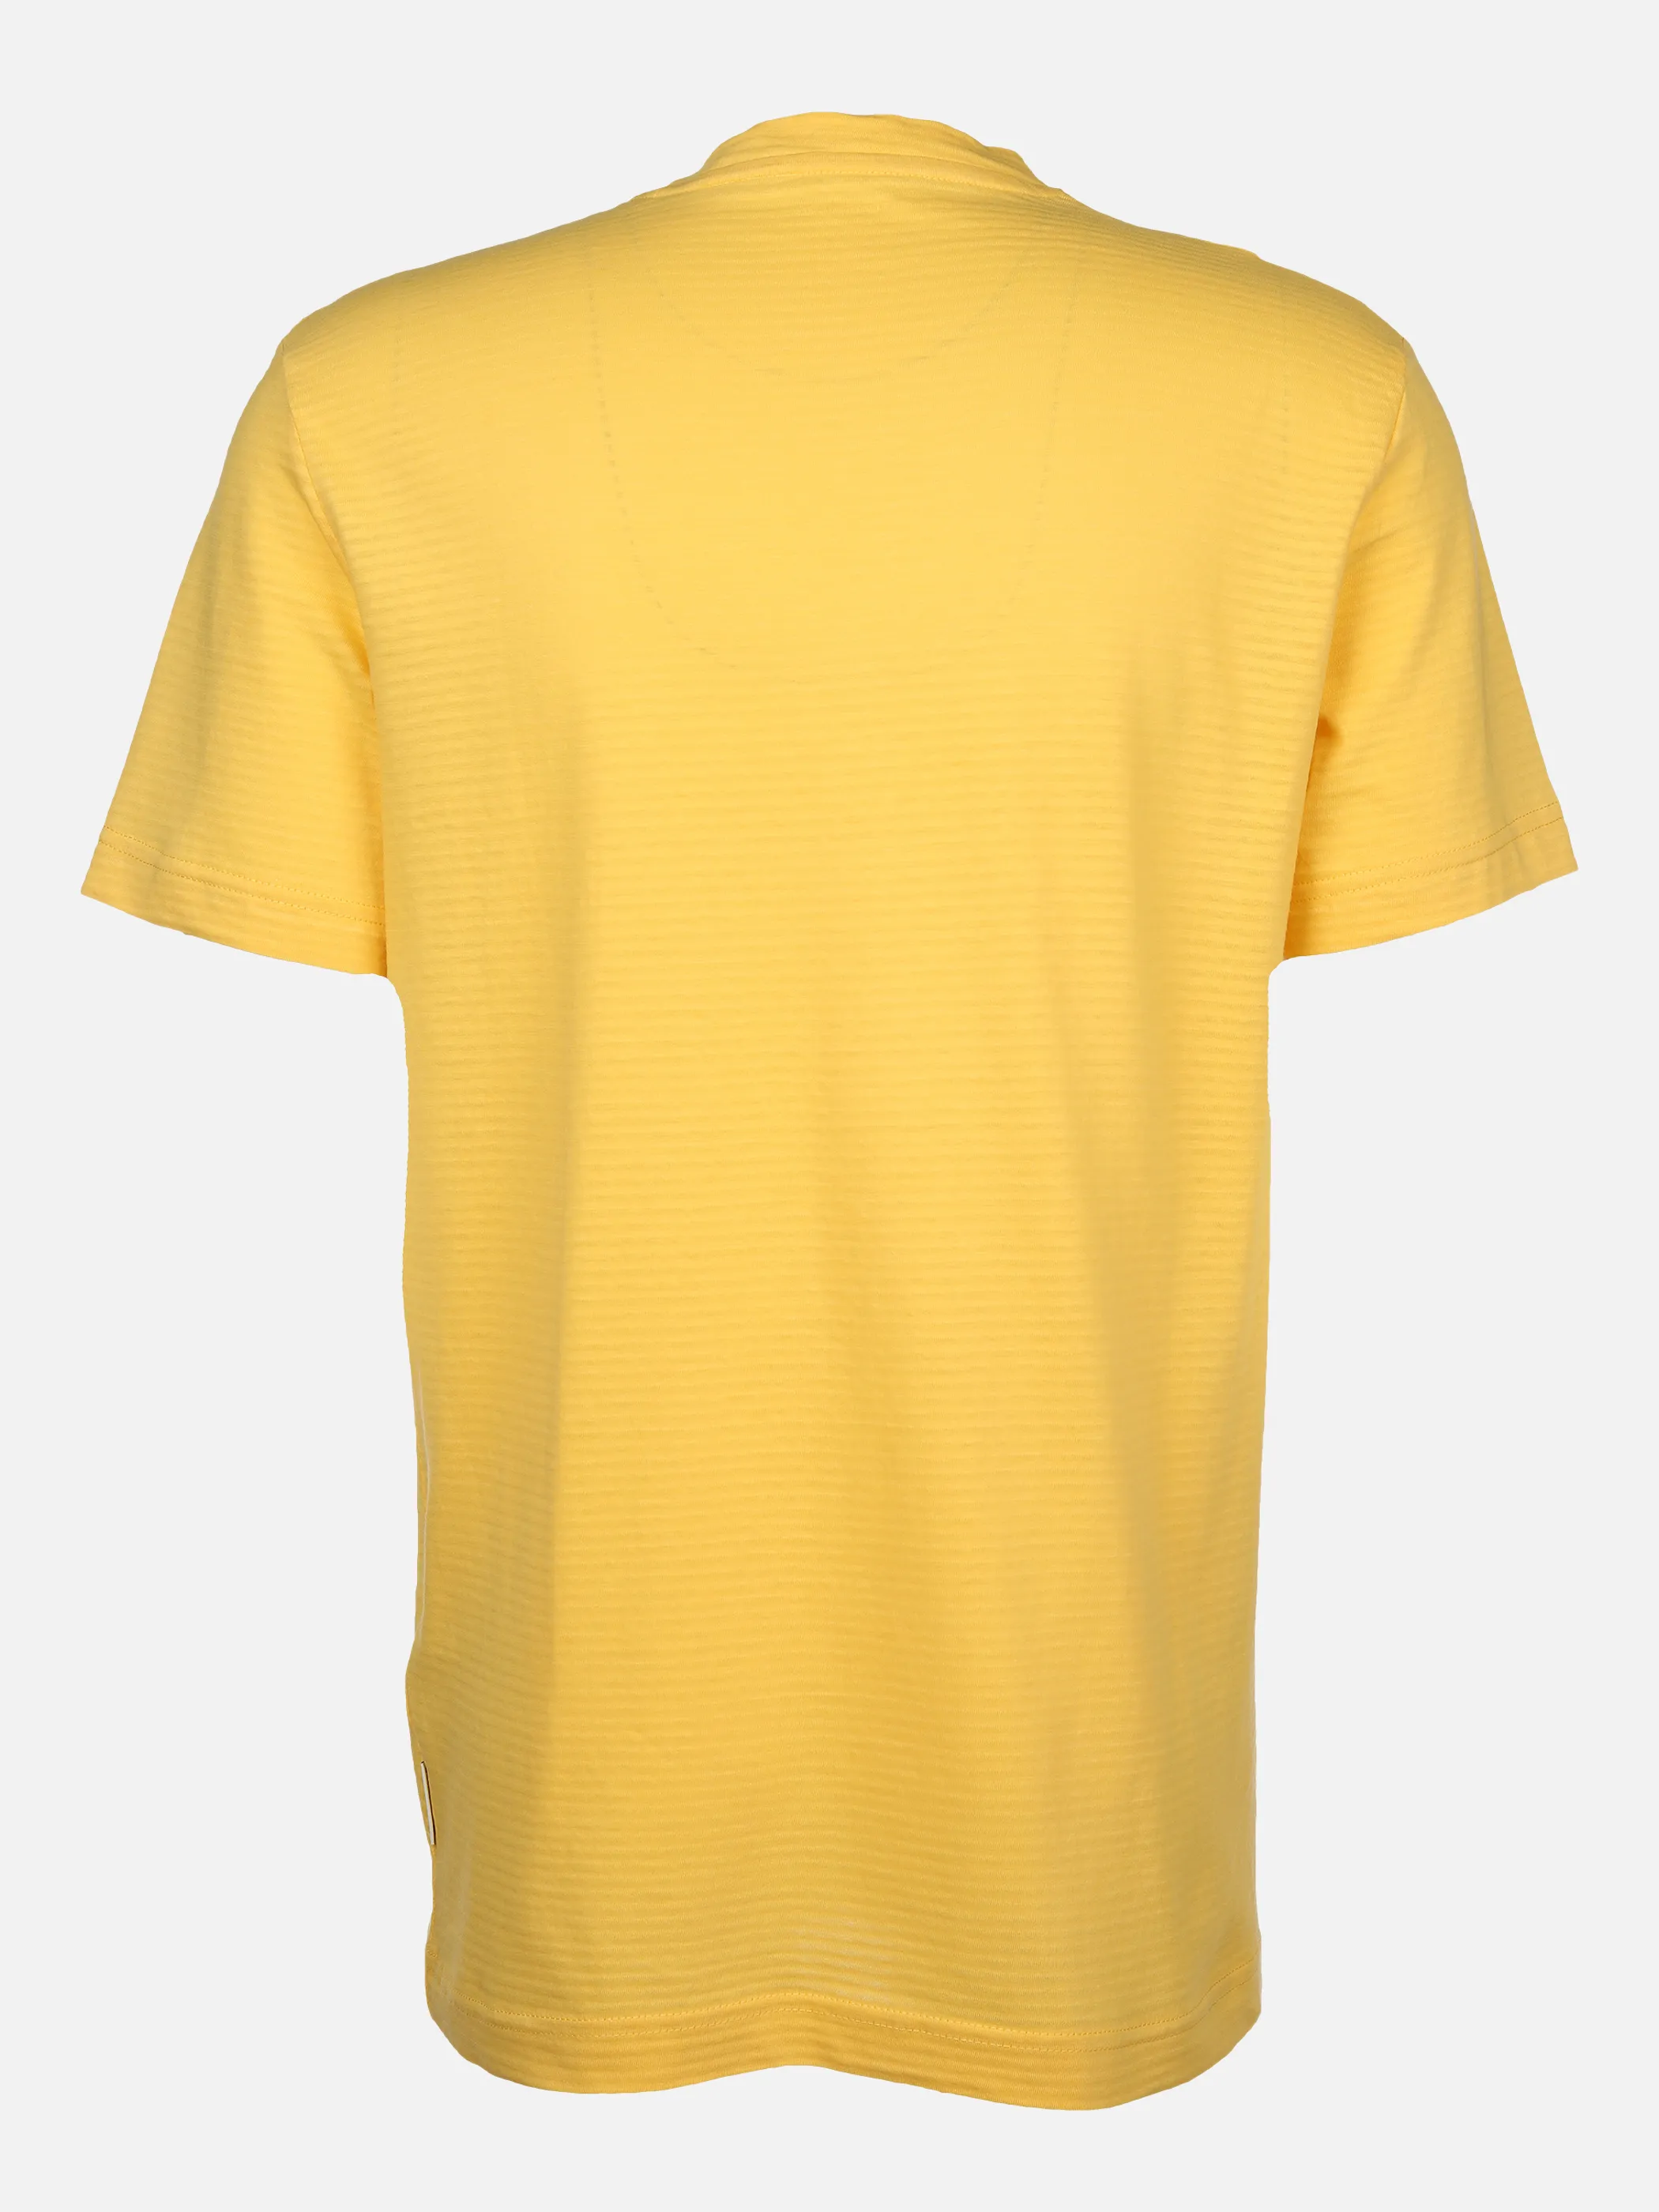 Tom Tailor 1036319 basic t-shirt with pocket Gelb 880551 16719 2